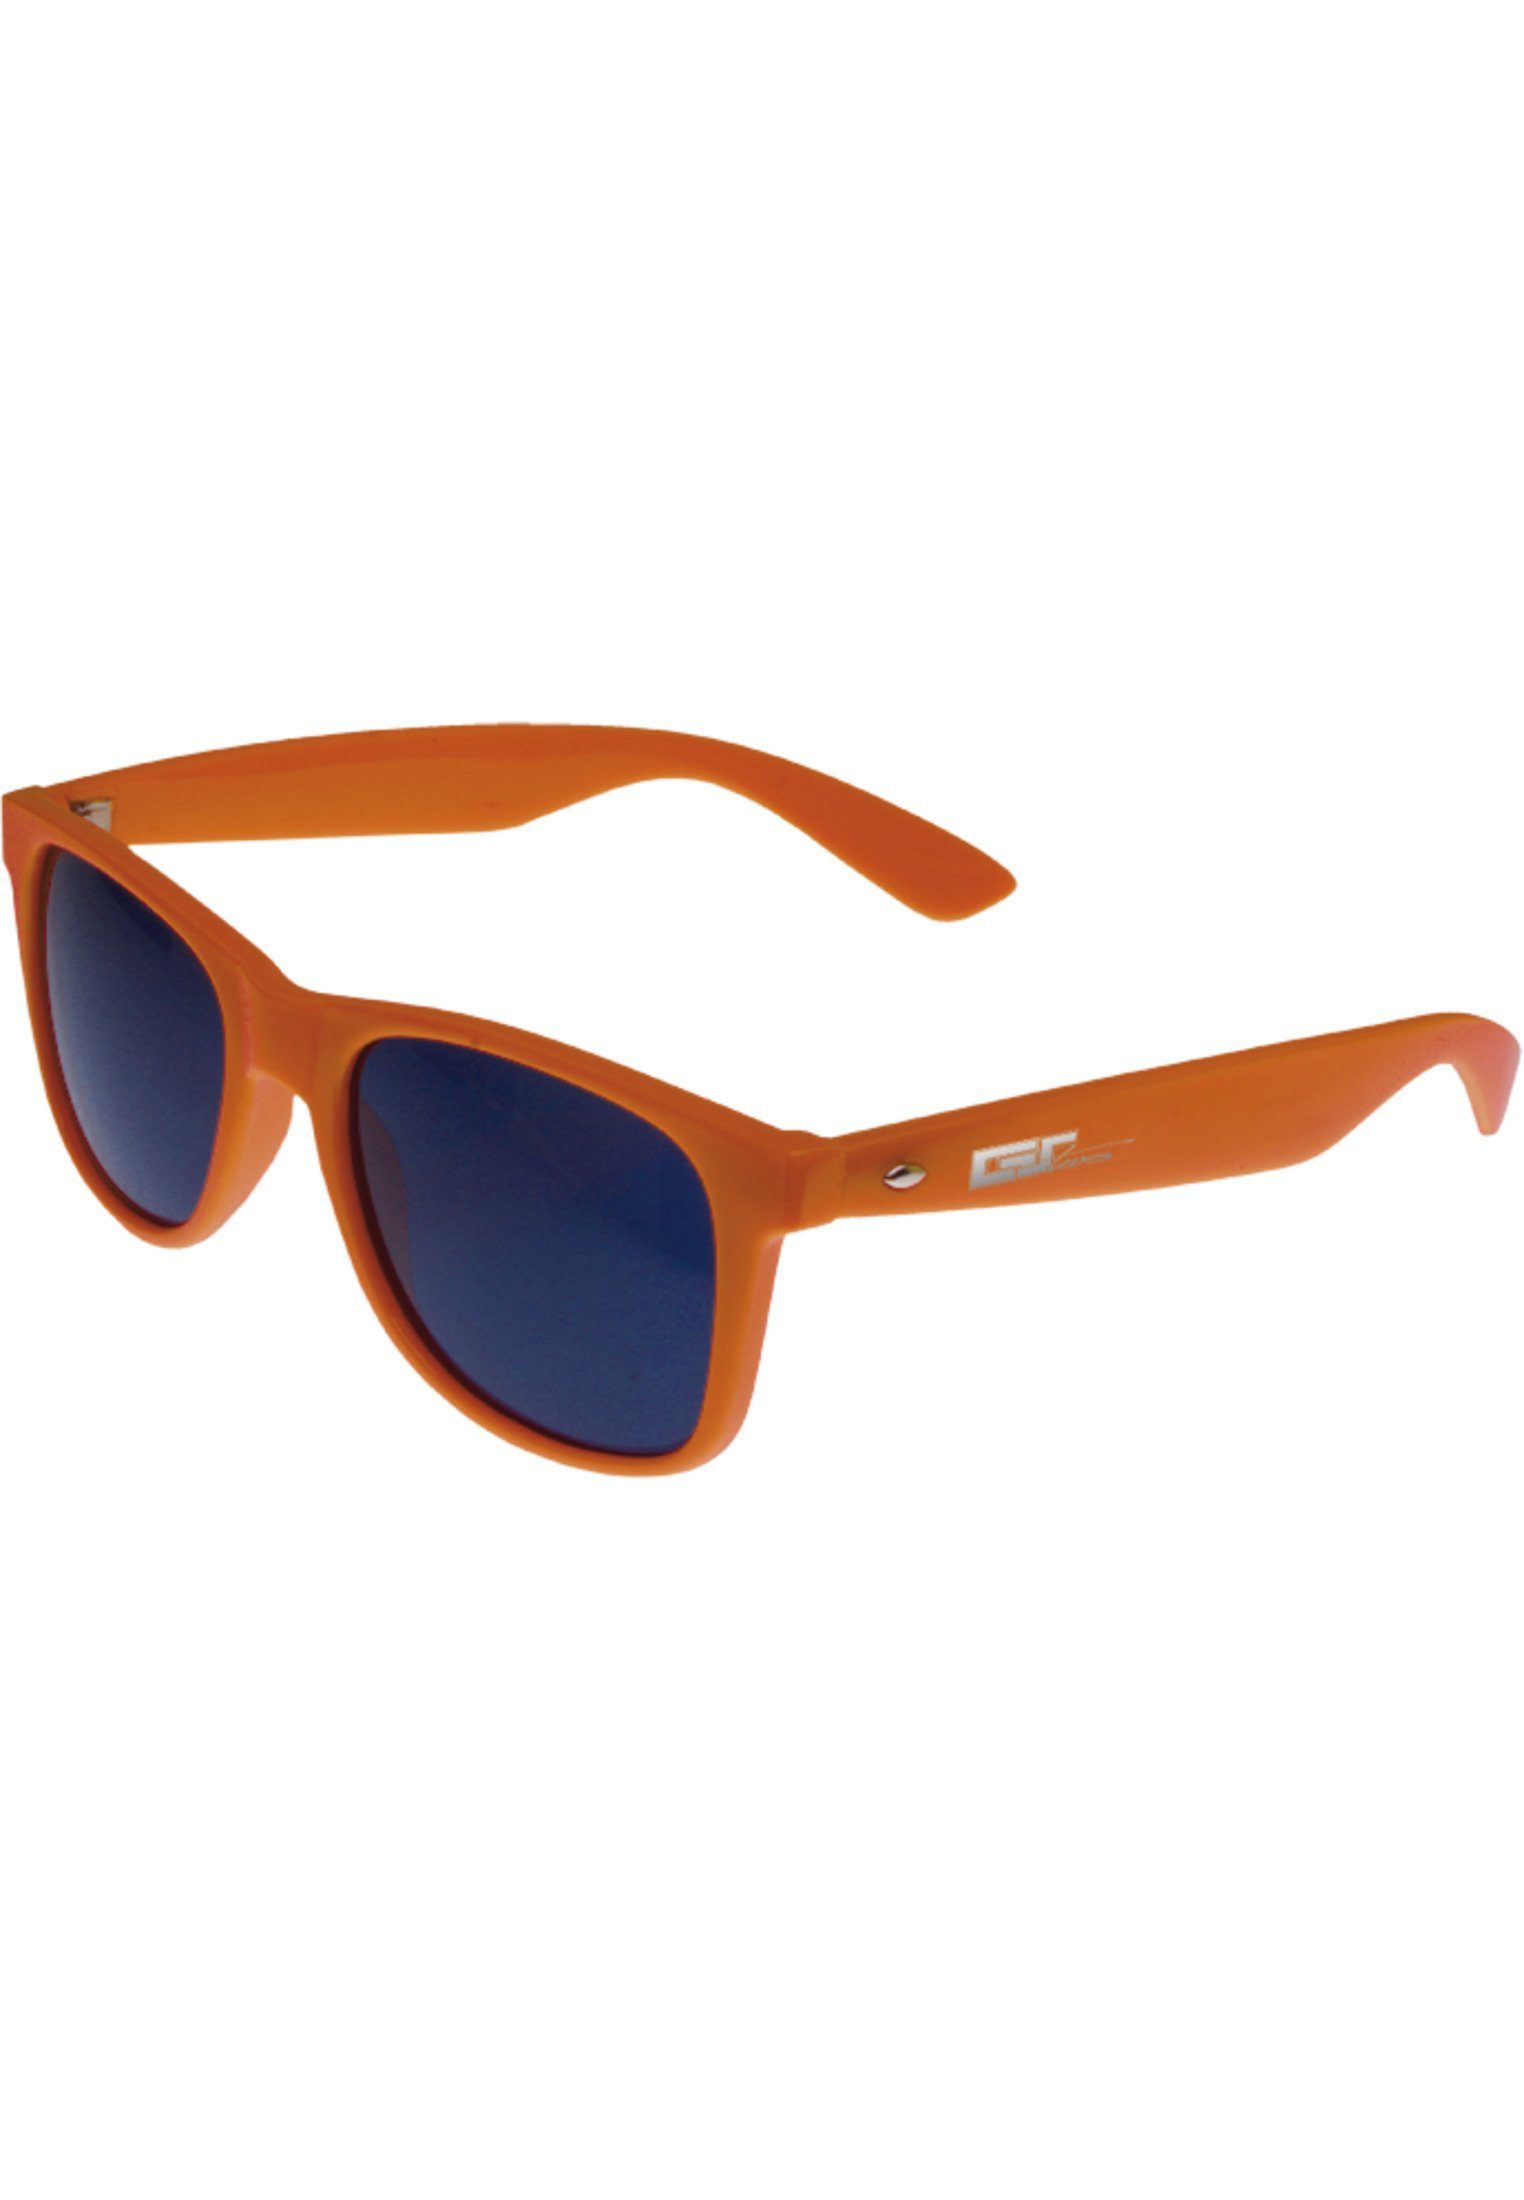 MSTRDS Sonnenbrille Accessoires Groove Shades GStwo orange